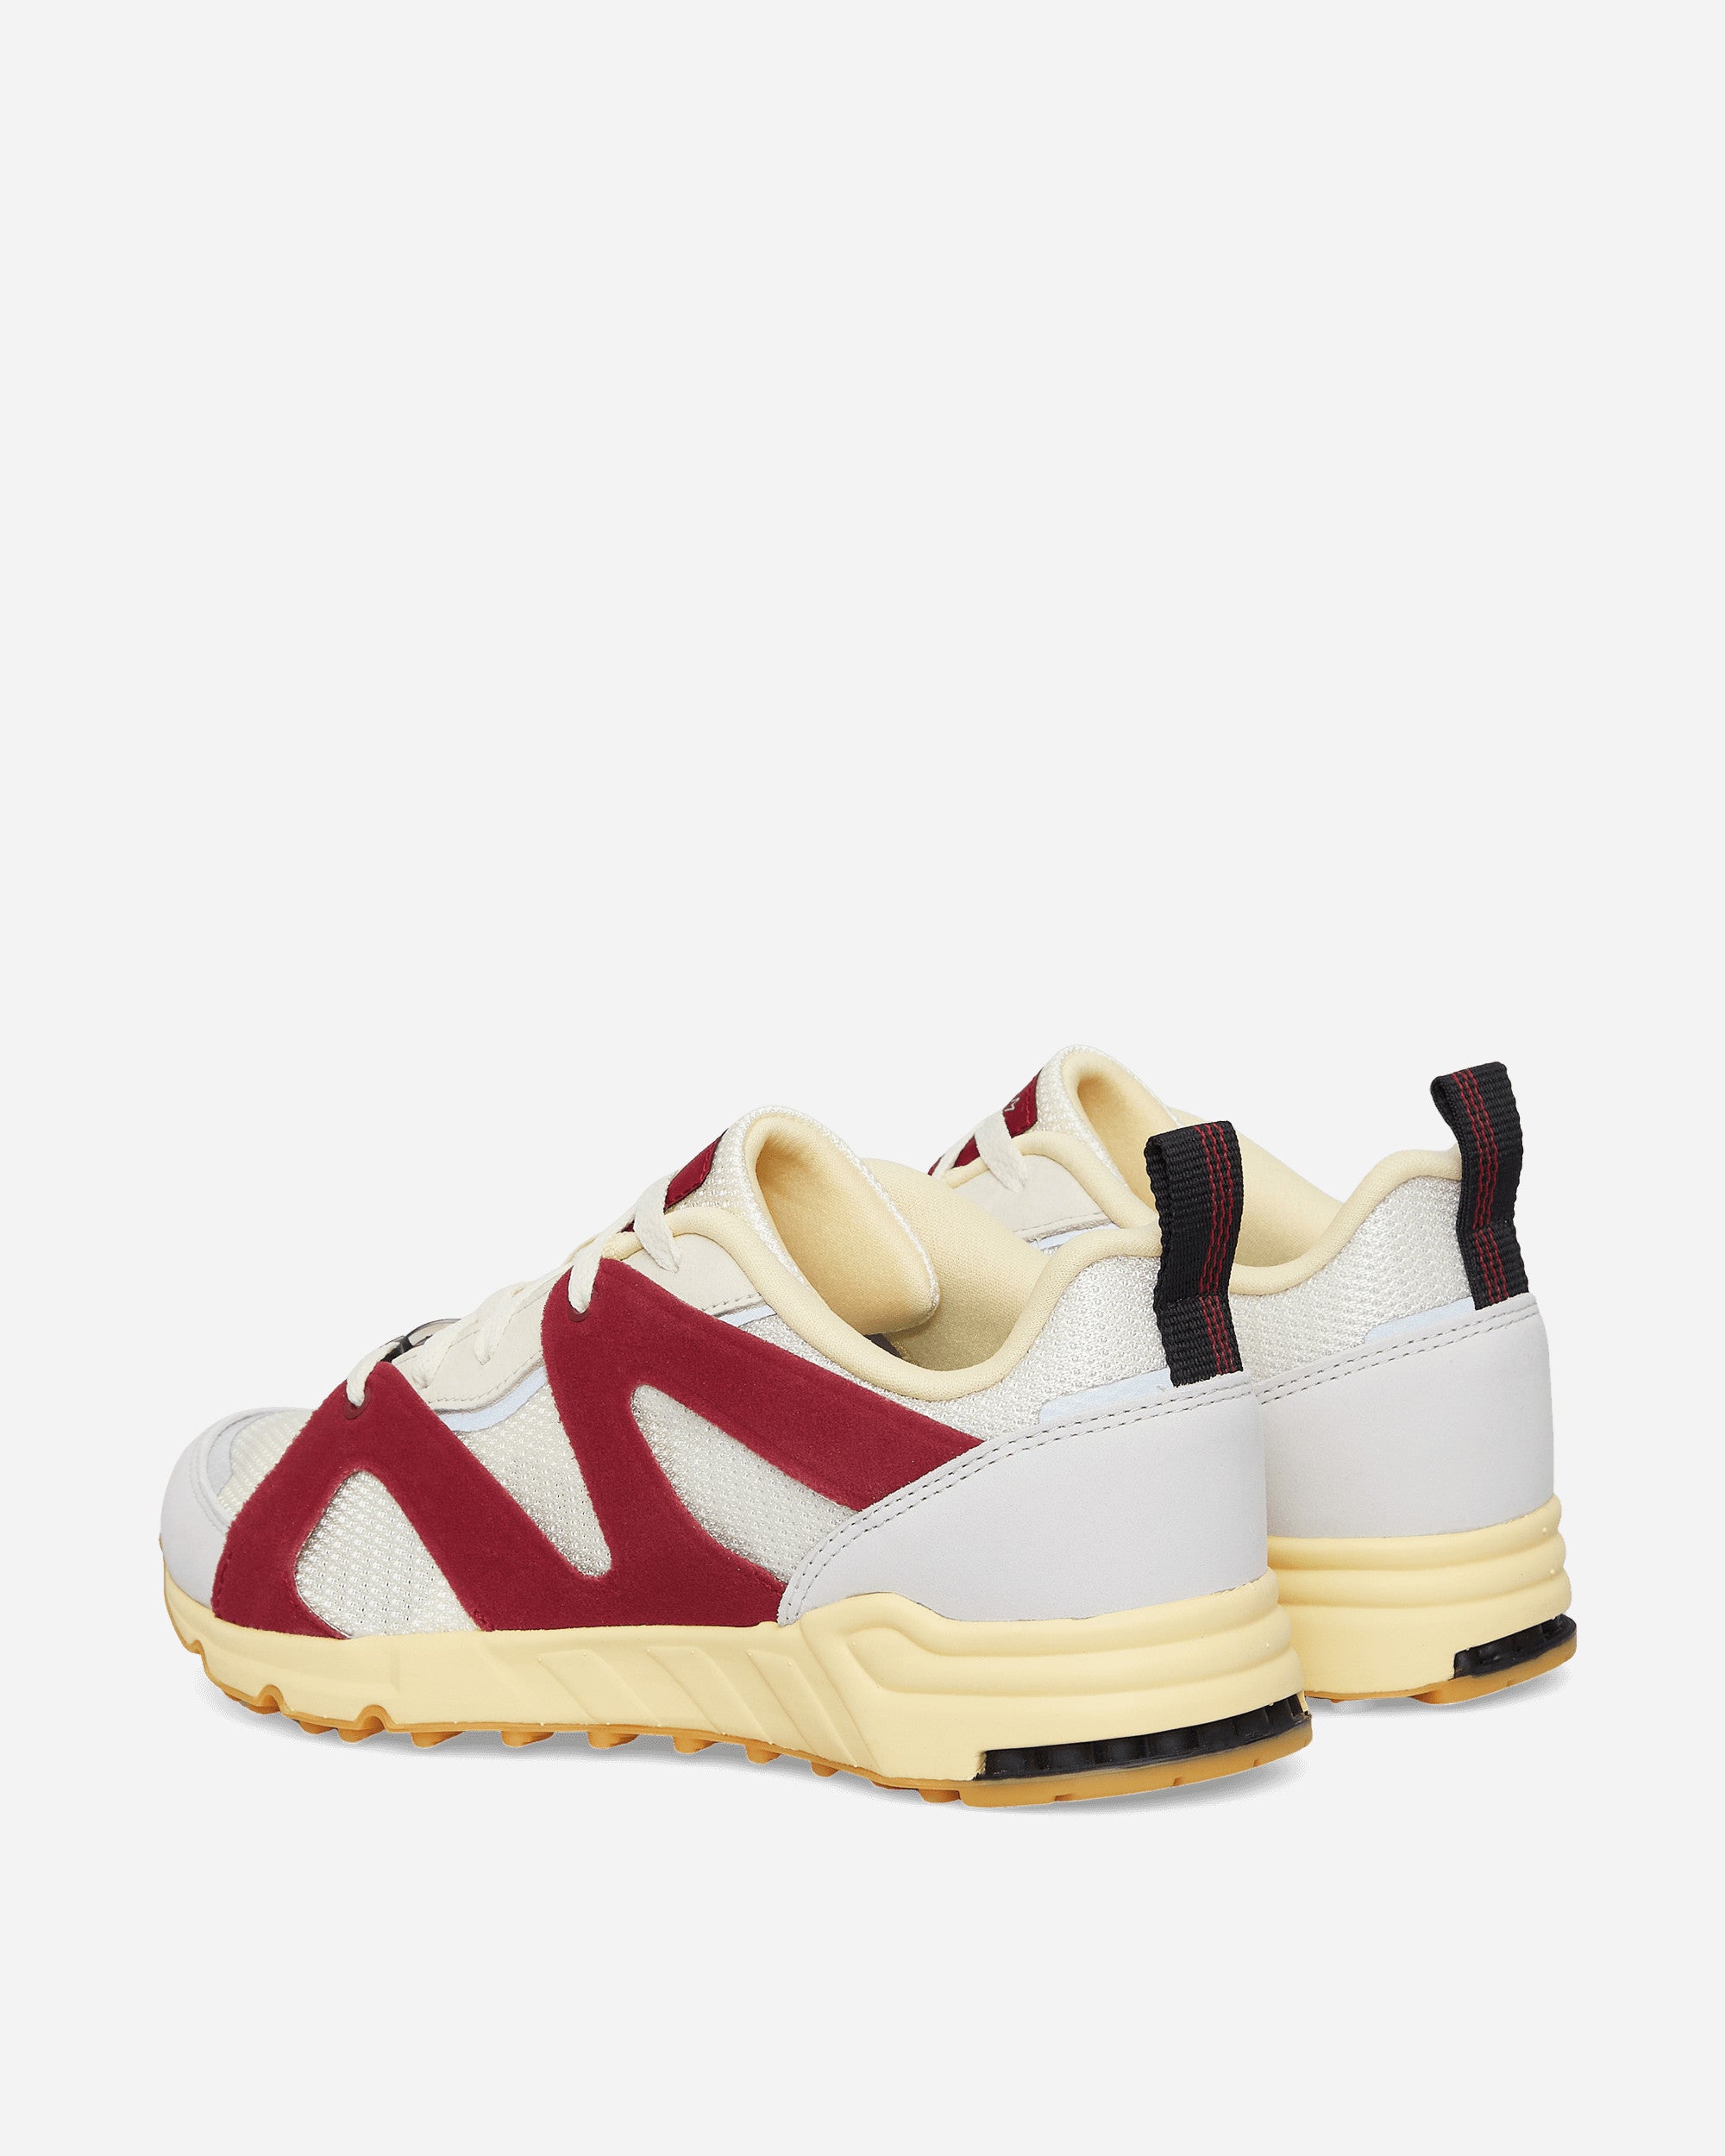 adidas Consortium Equipment Proto Cream White/Scarlet Sneakers Low GX3971